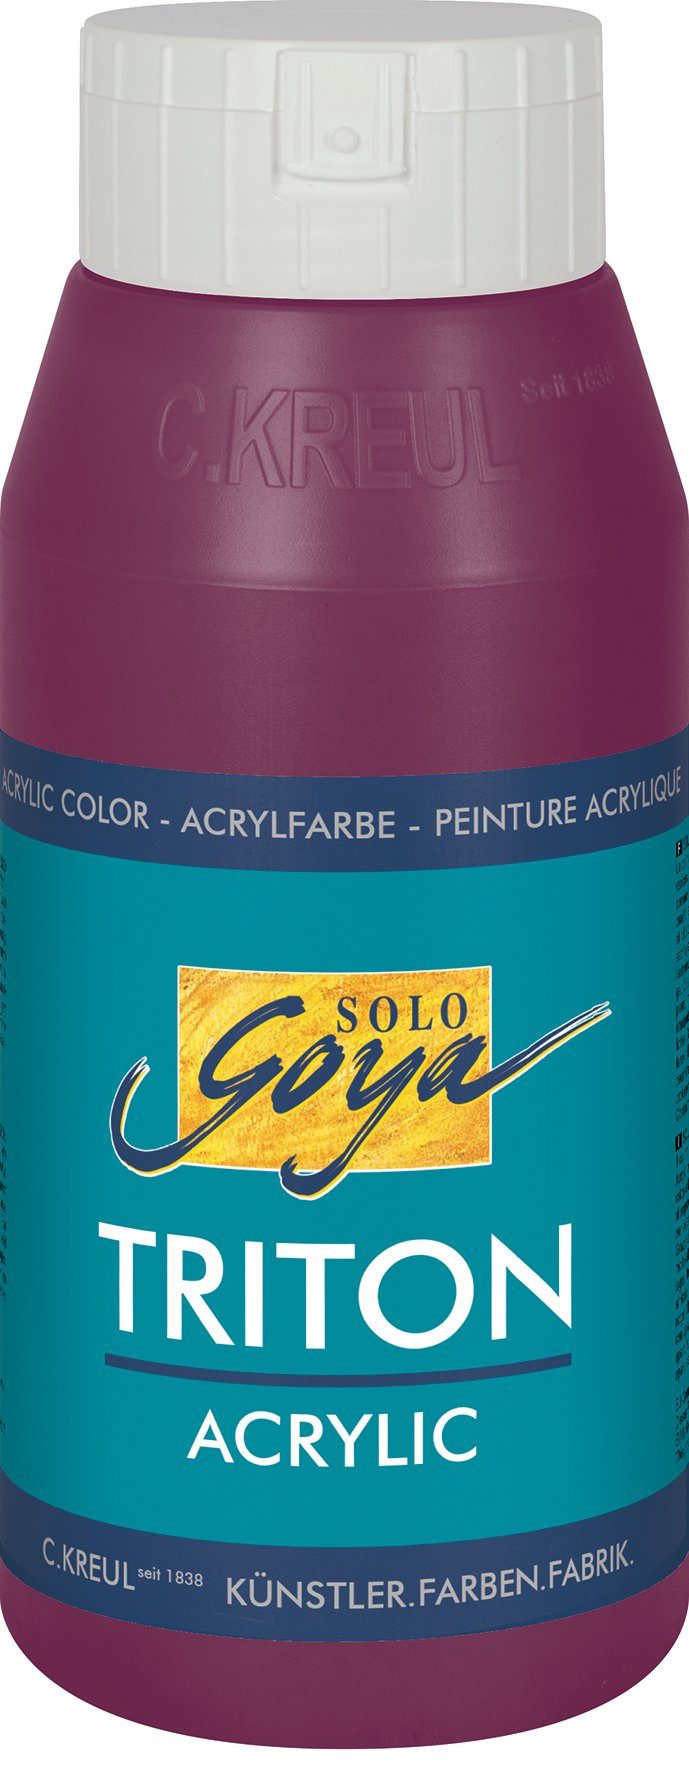 Kreul Acrylfarbe Solo Goya Triton Acrylic, 750 ml Bordeaux